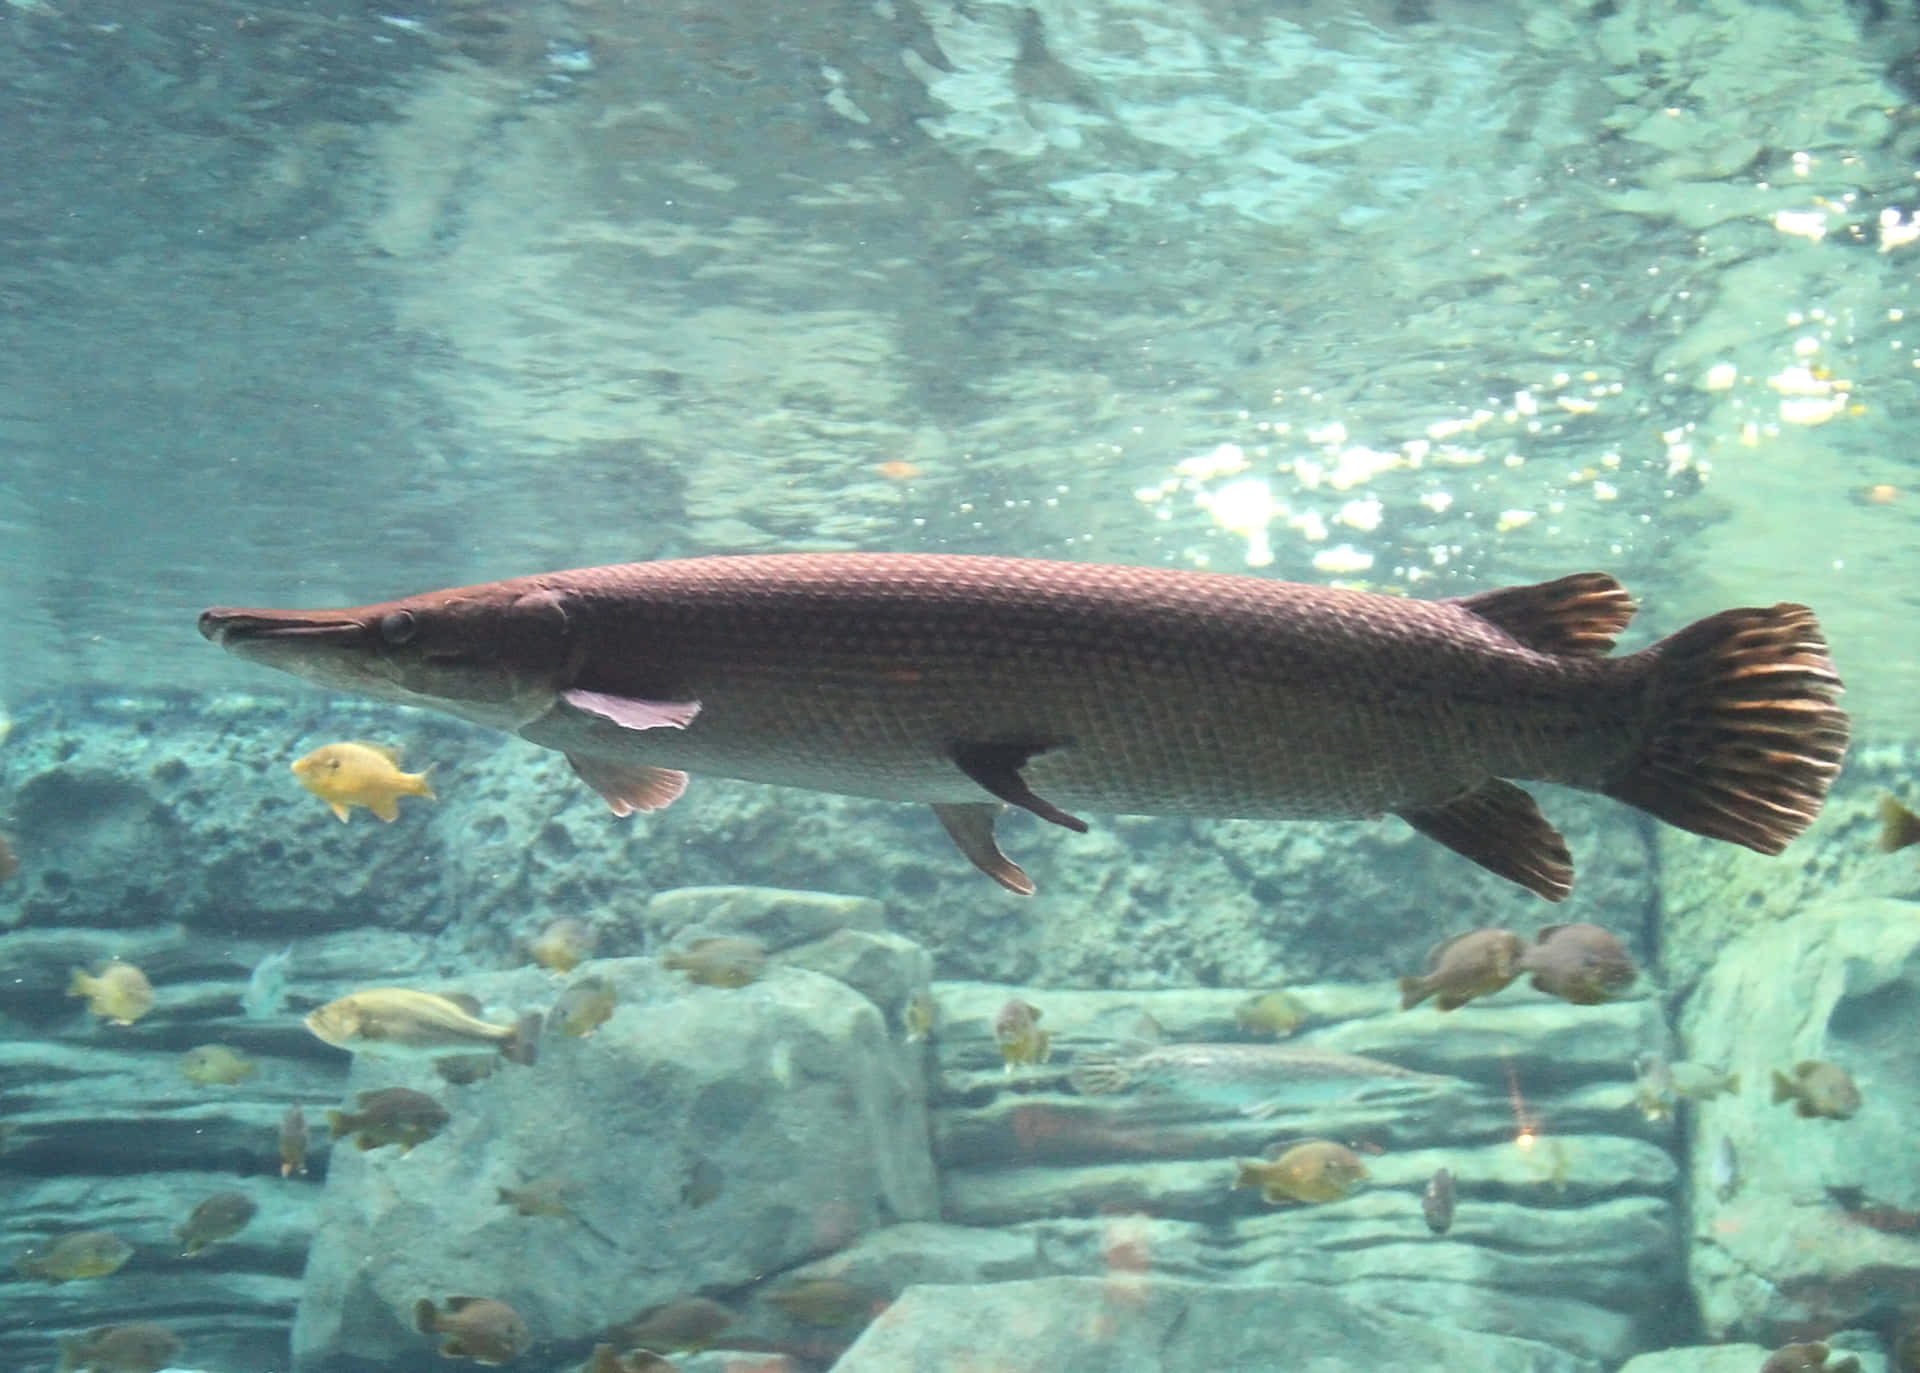 A Large Fish Swimming In An Aquarium